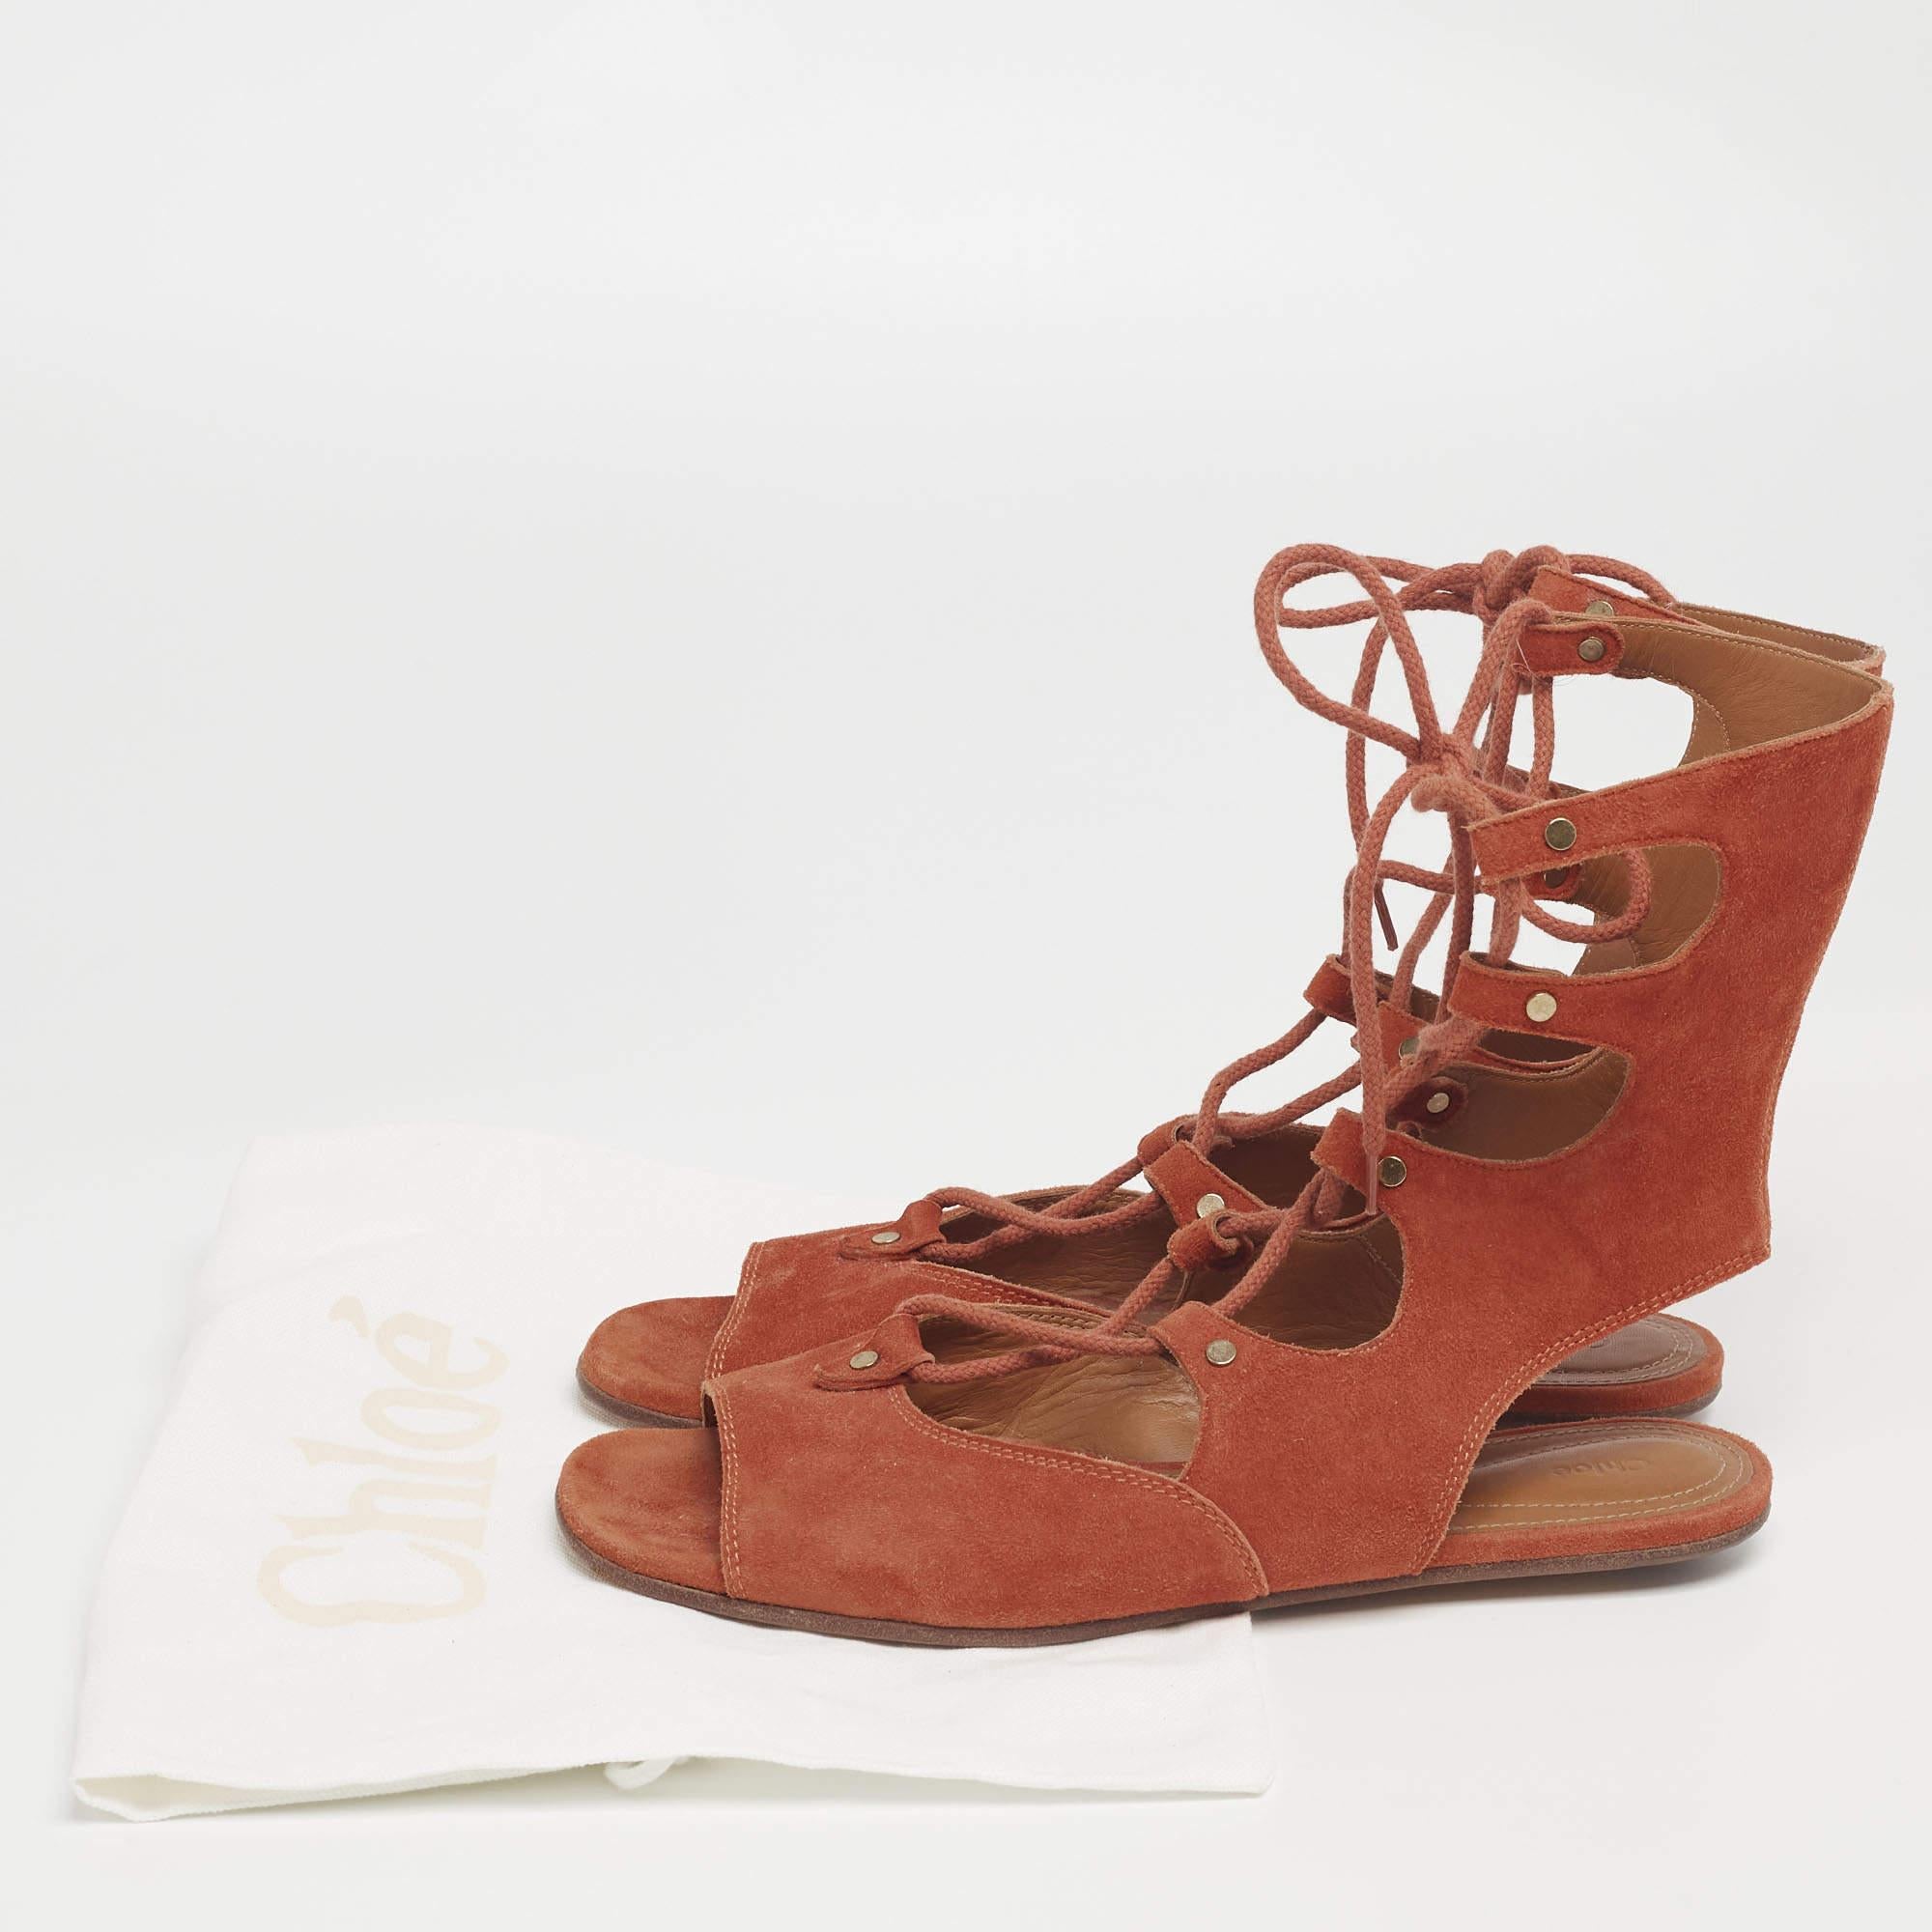 Chloe Rust Suede Gladiator Flat Sandals Size 38 1